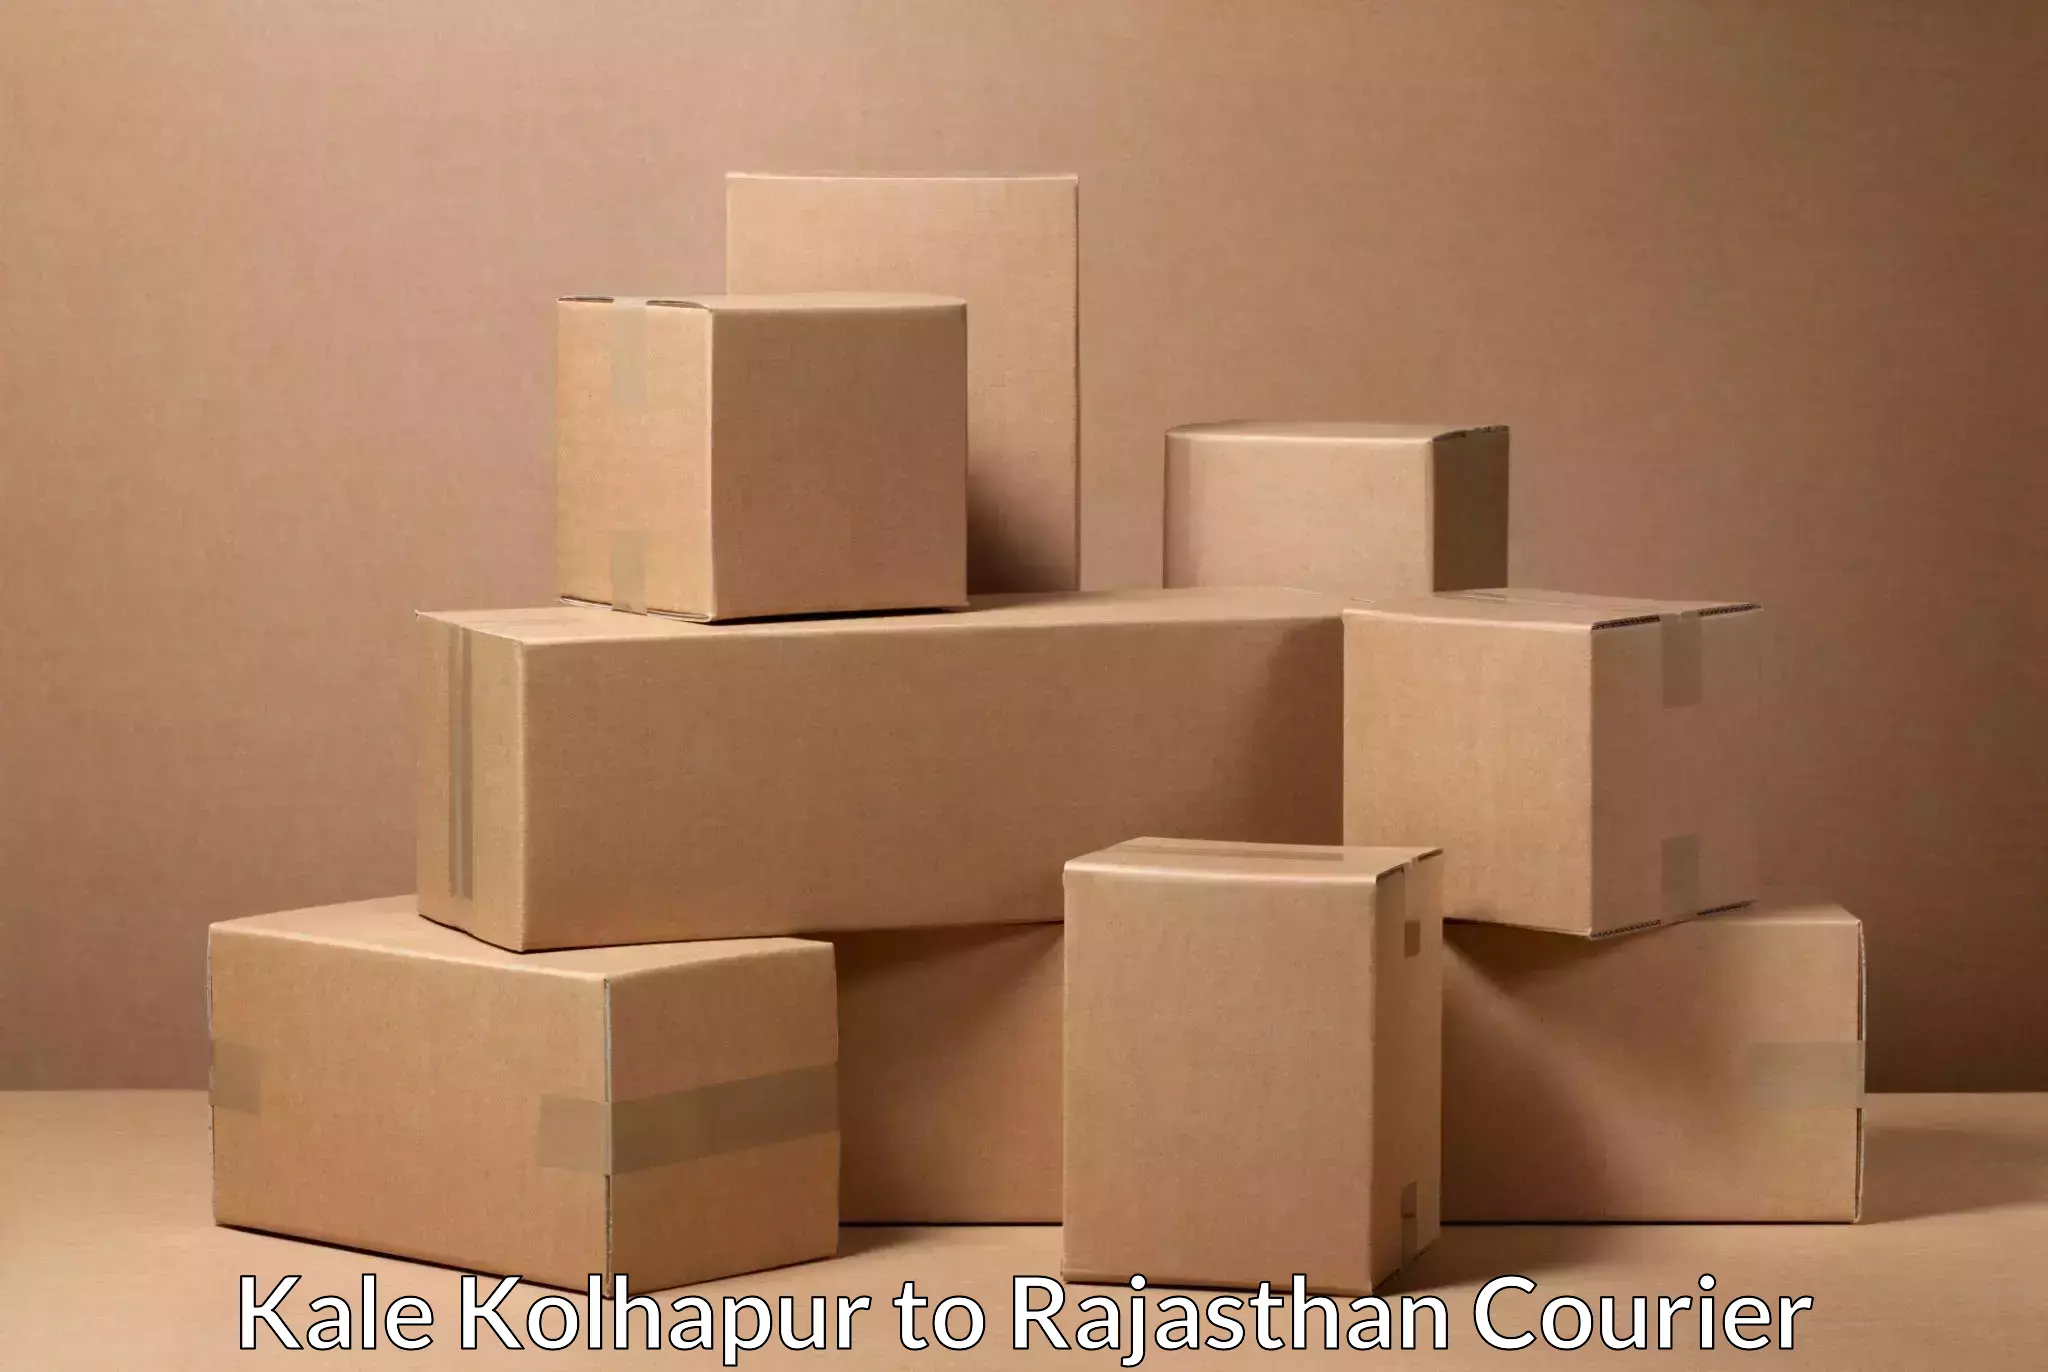 Courier service innovation Kale Kolhapur to Pokhran